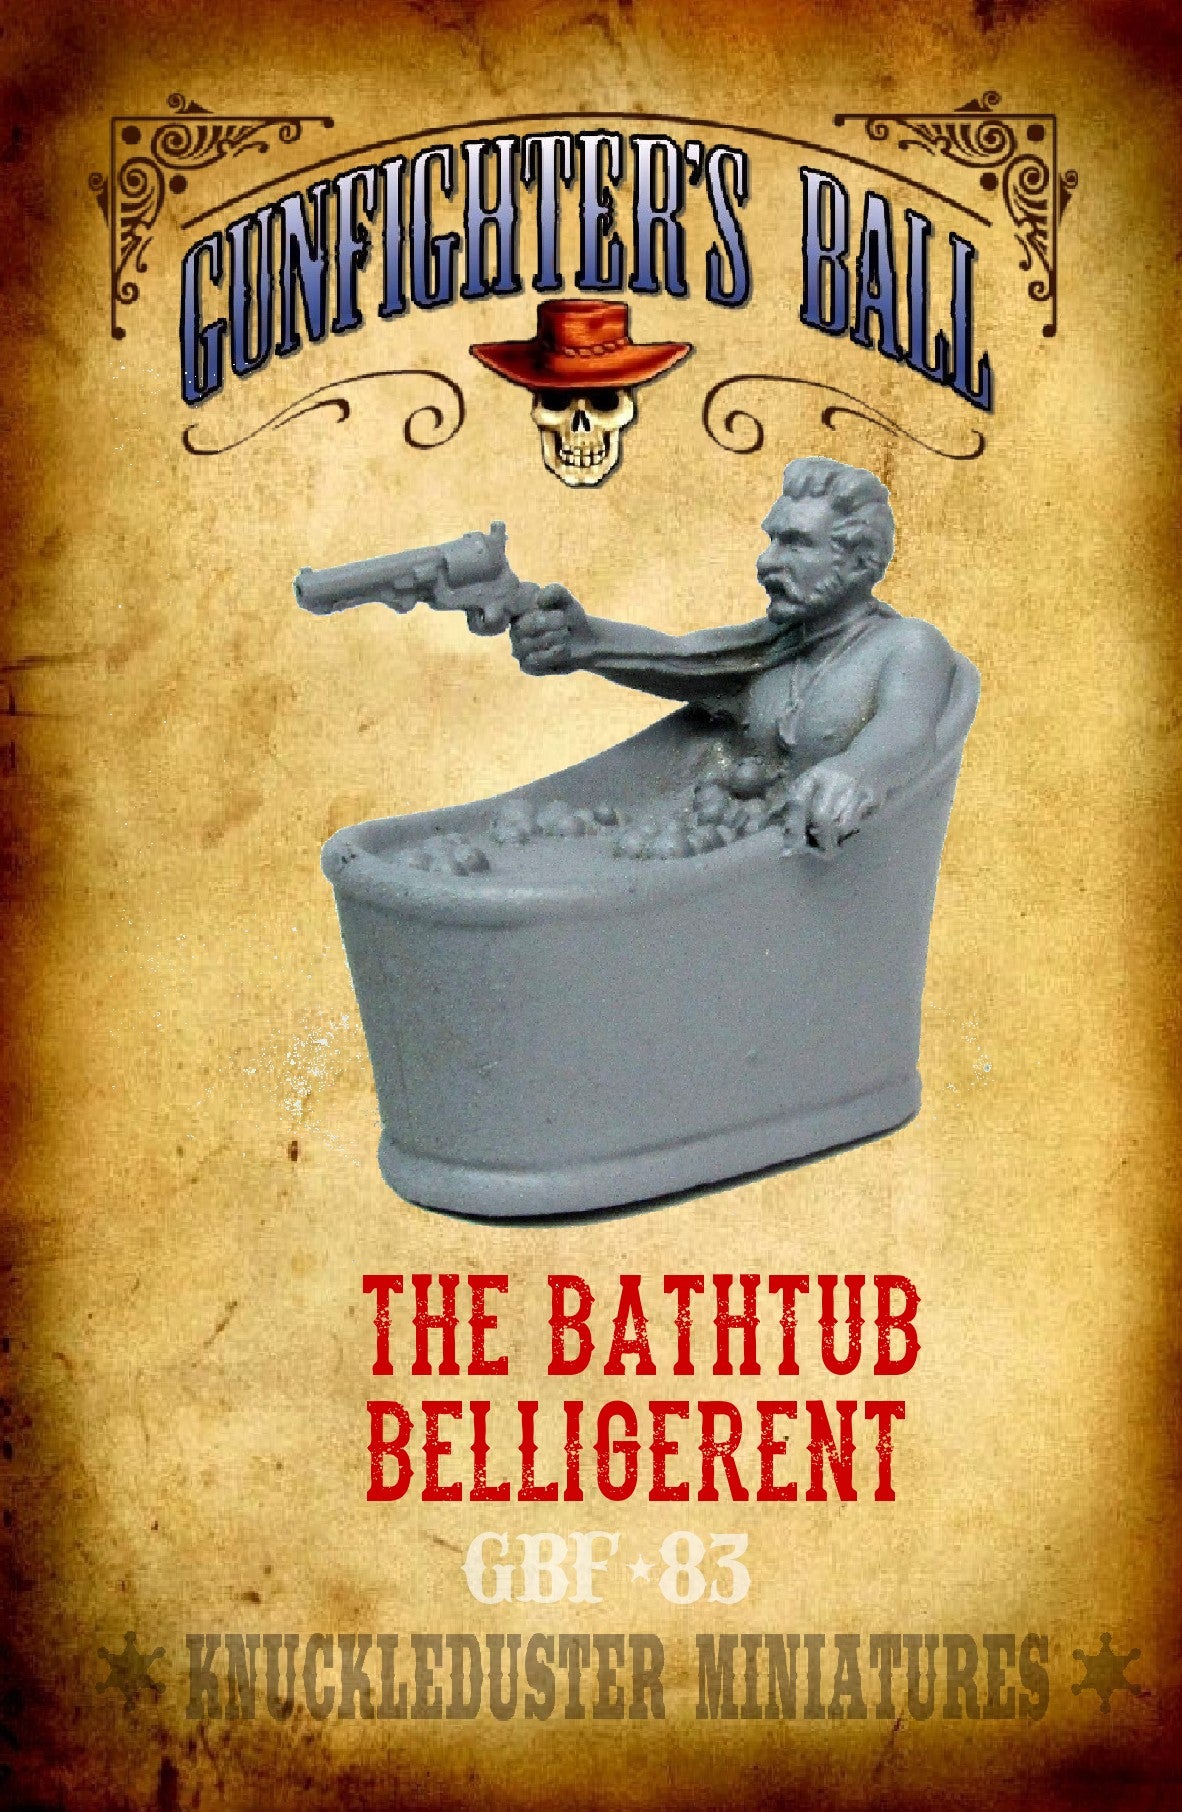 The Bathtub Belligerant